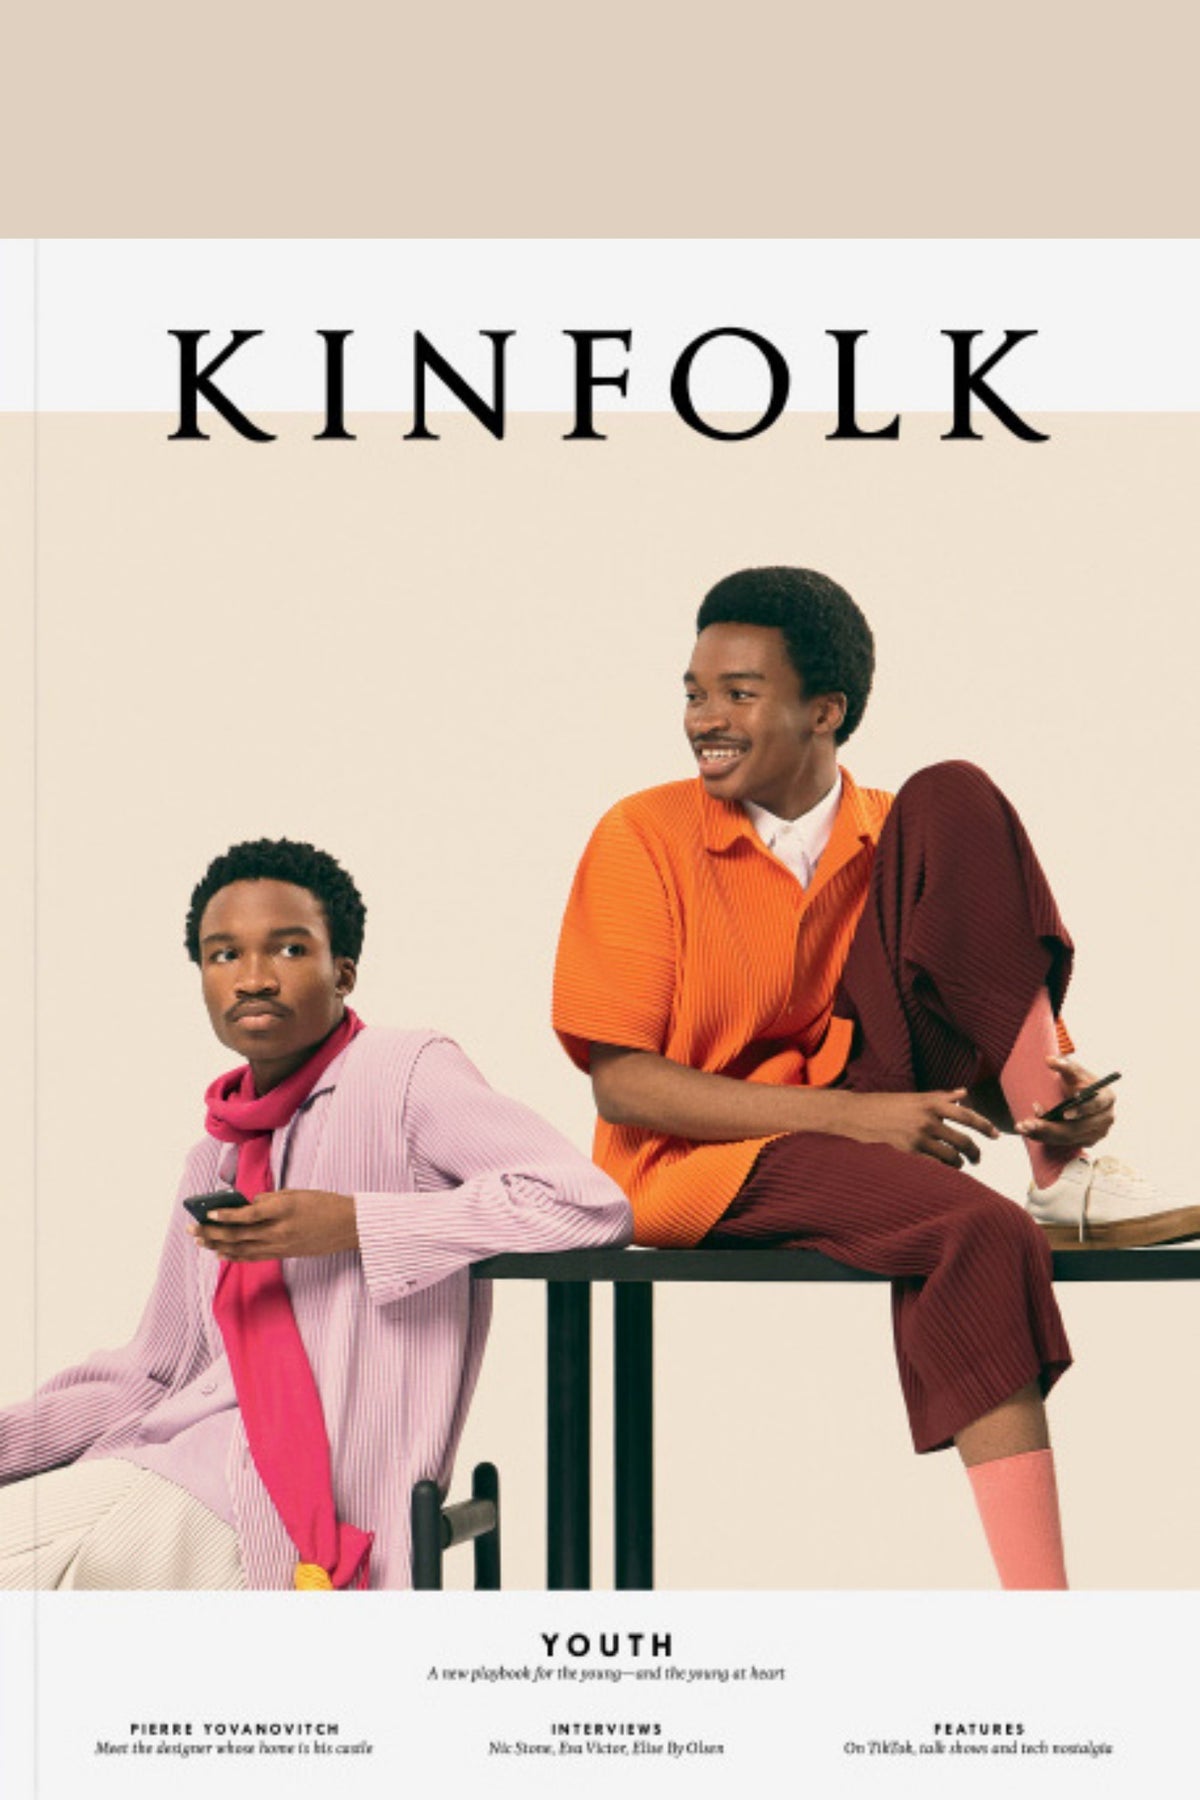 Kinfolk Magazine Volume 39 Youth cover